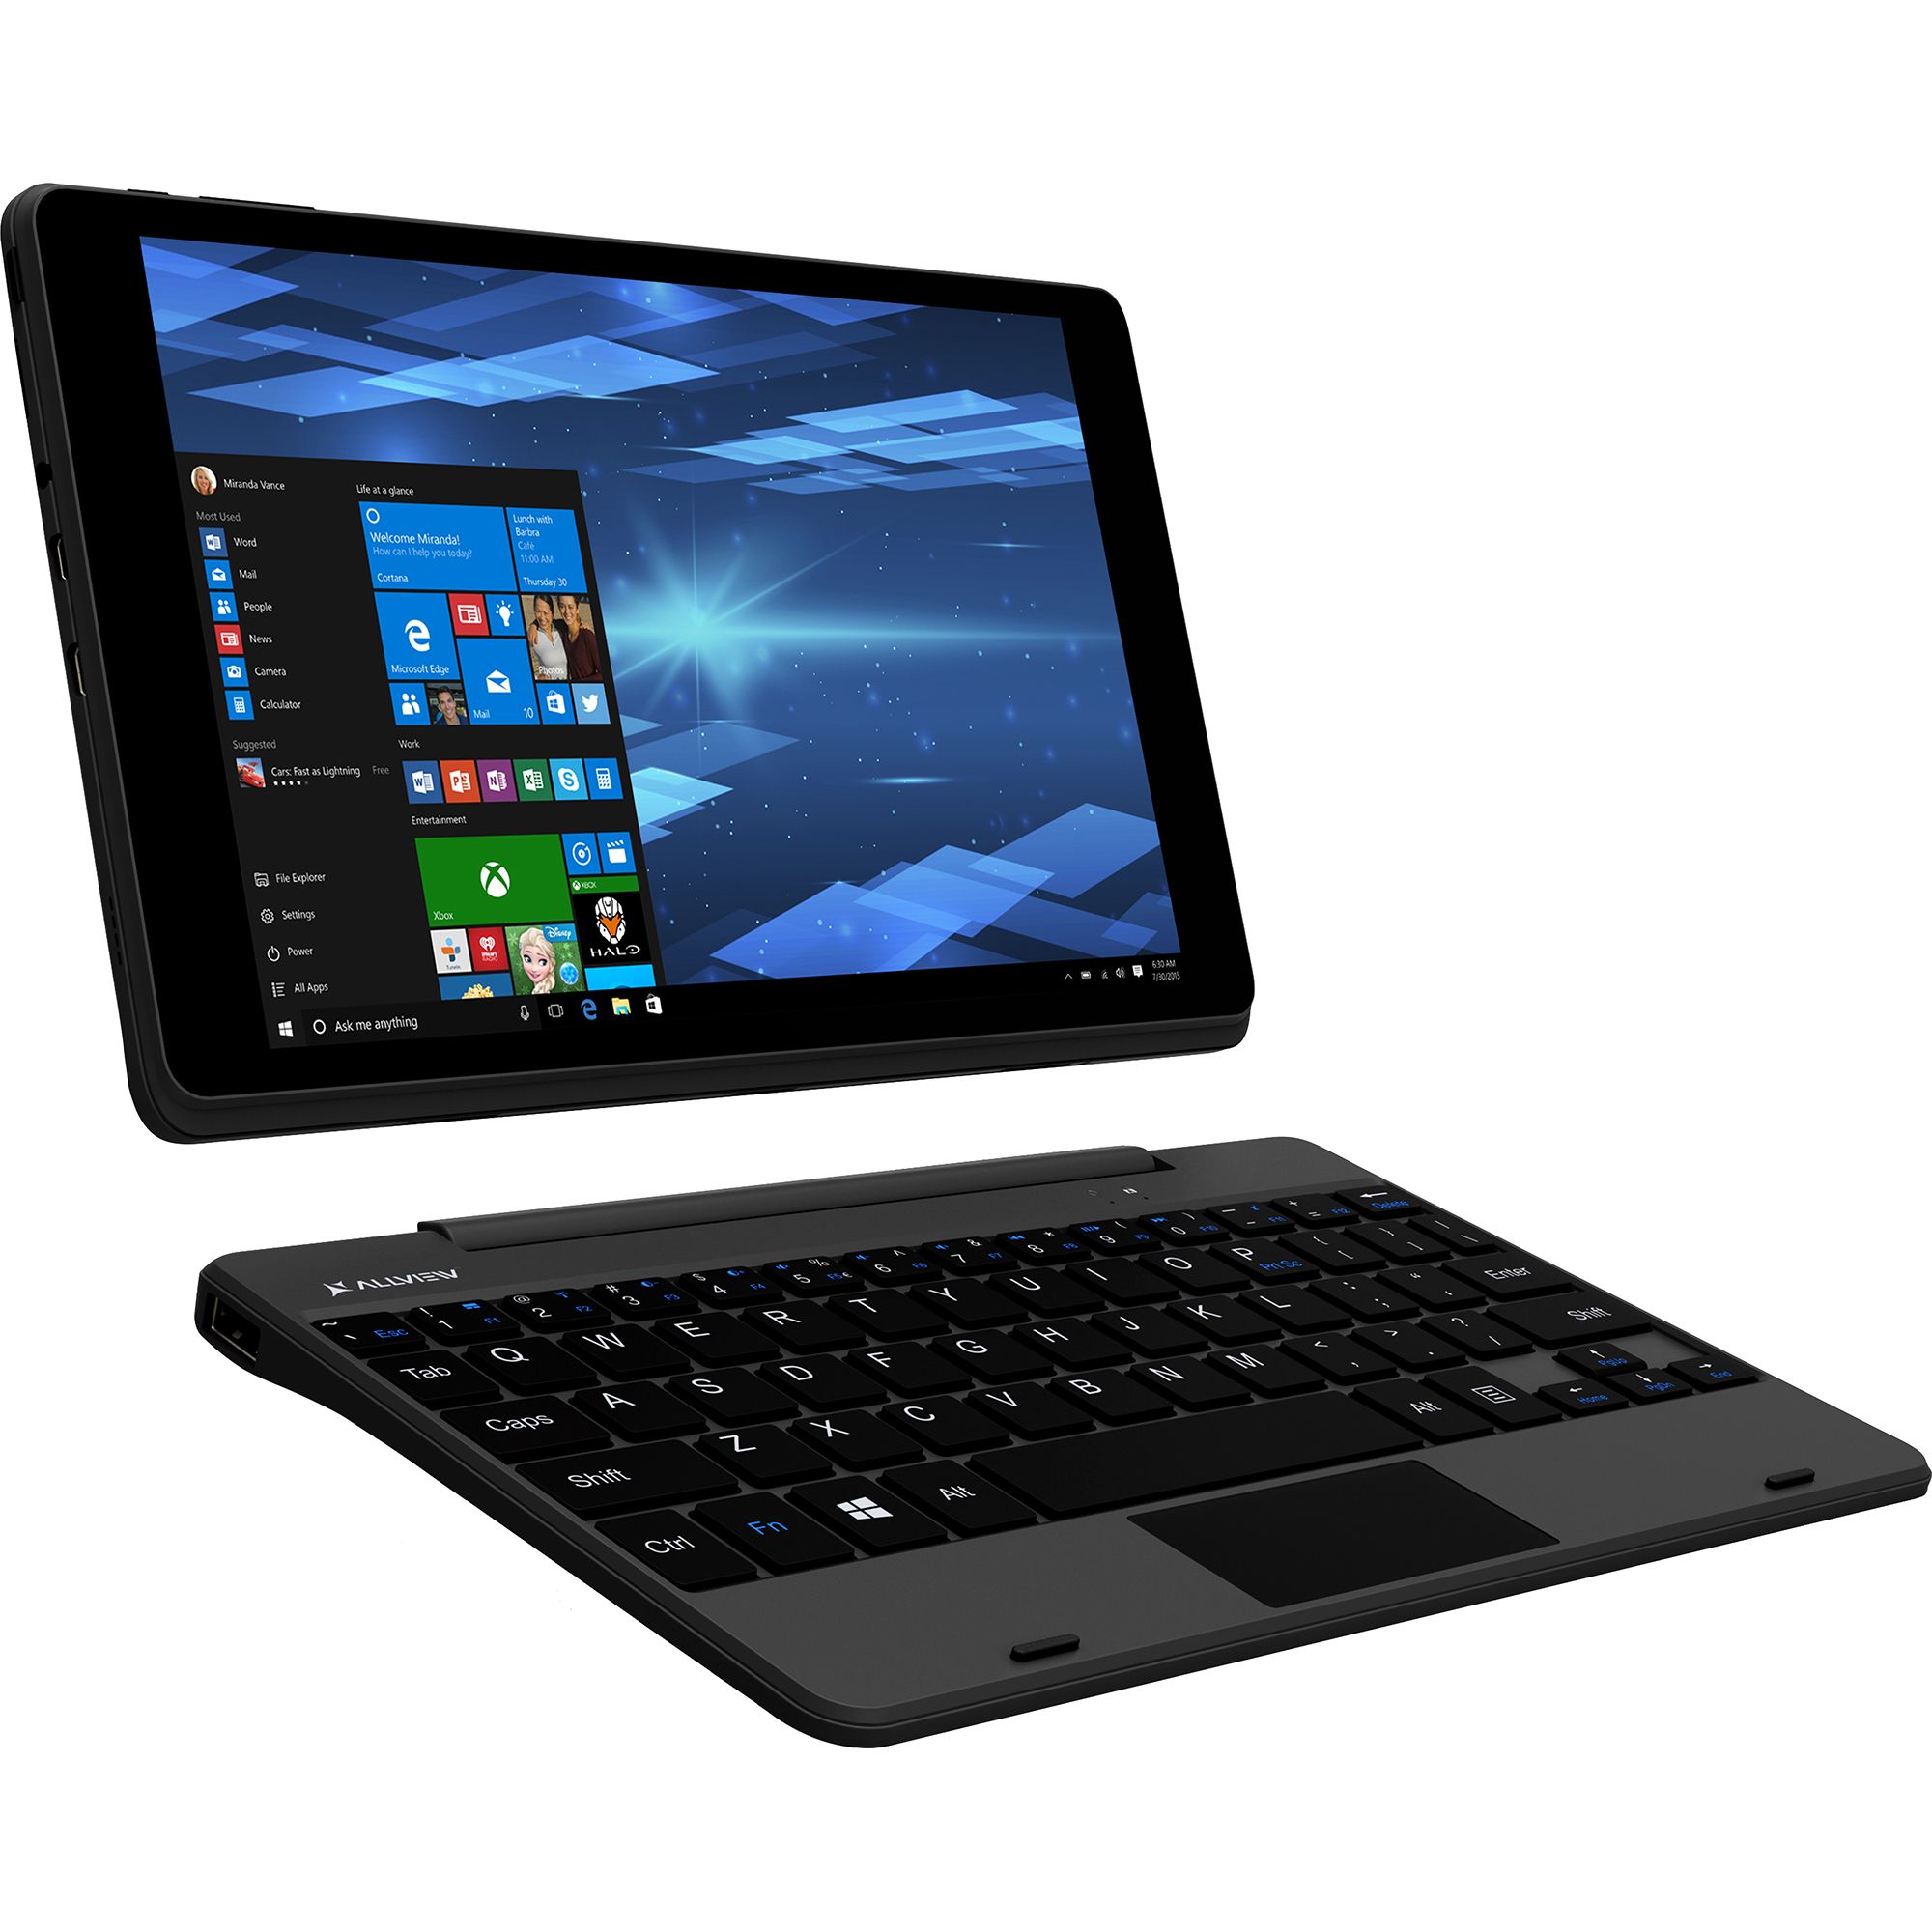  Laptop 2 in 1 Allview Wi901N, Intel Atom Z3735F, 2GB DDR3, HDD 32GB, Intel HD Graphics, Windows 10 Home 